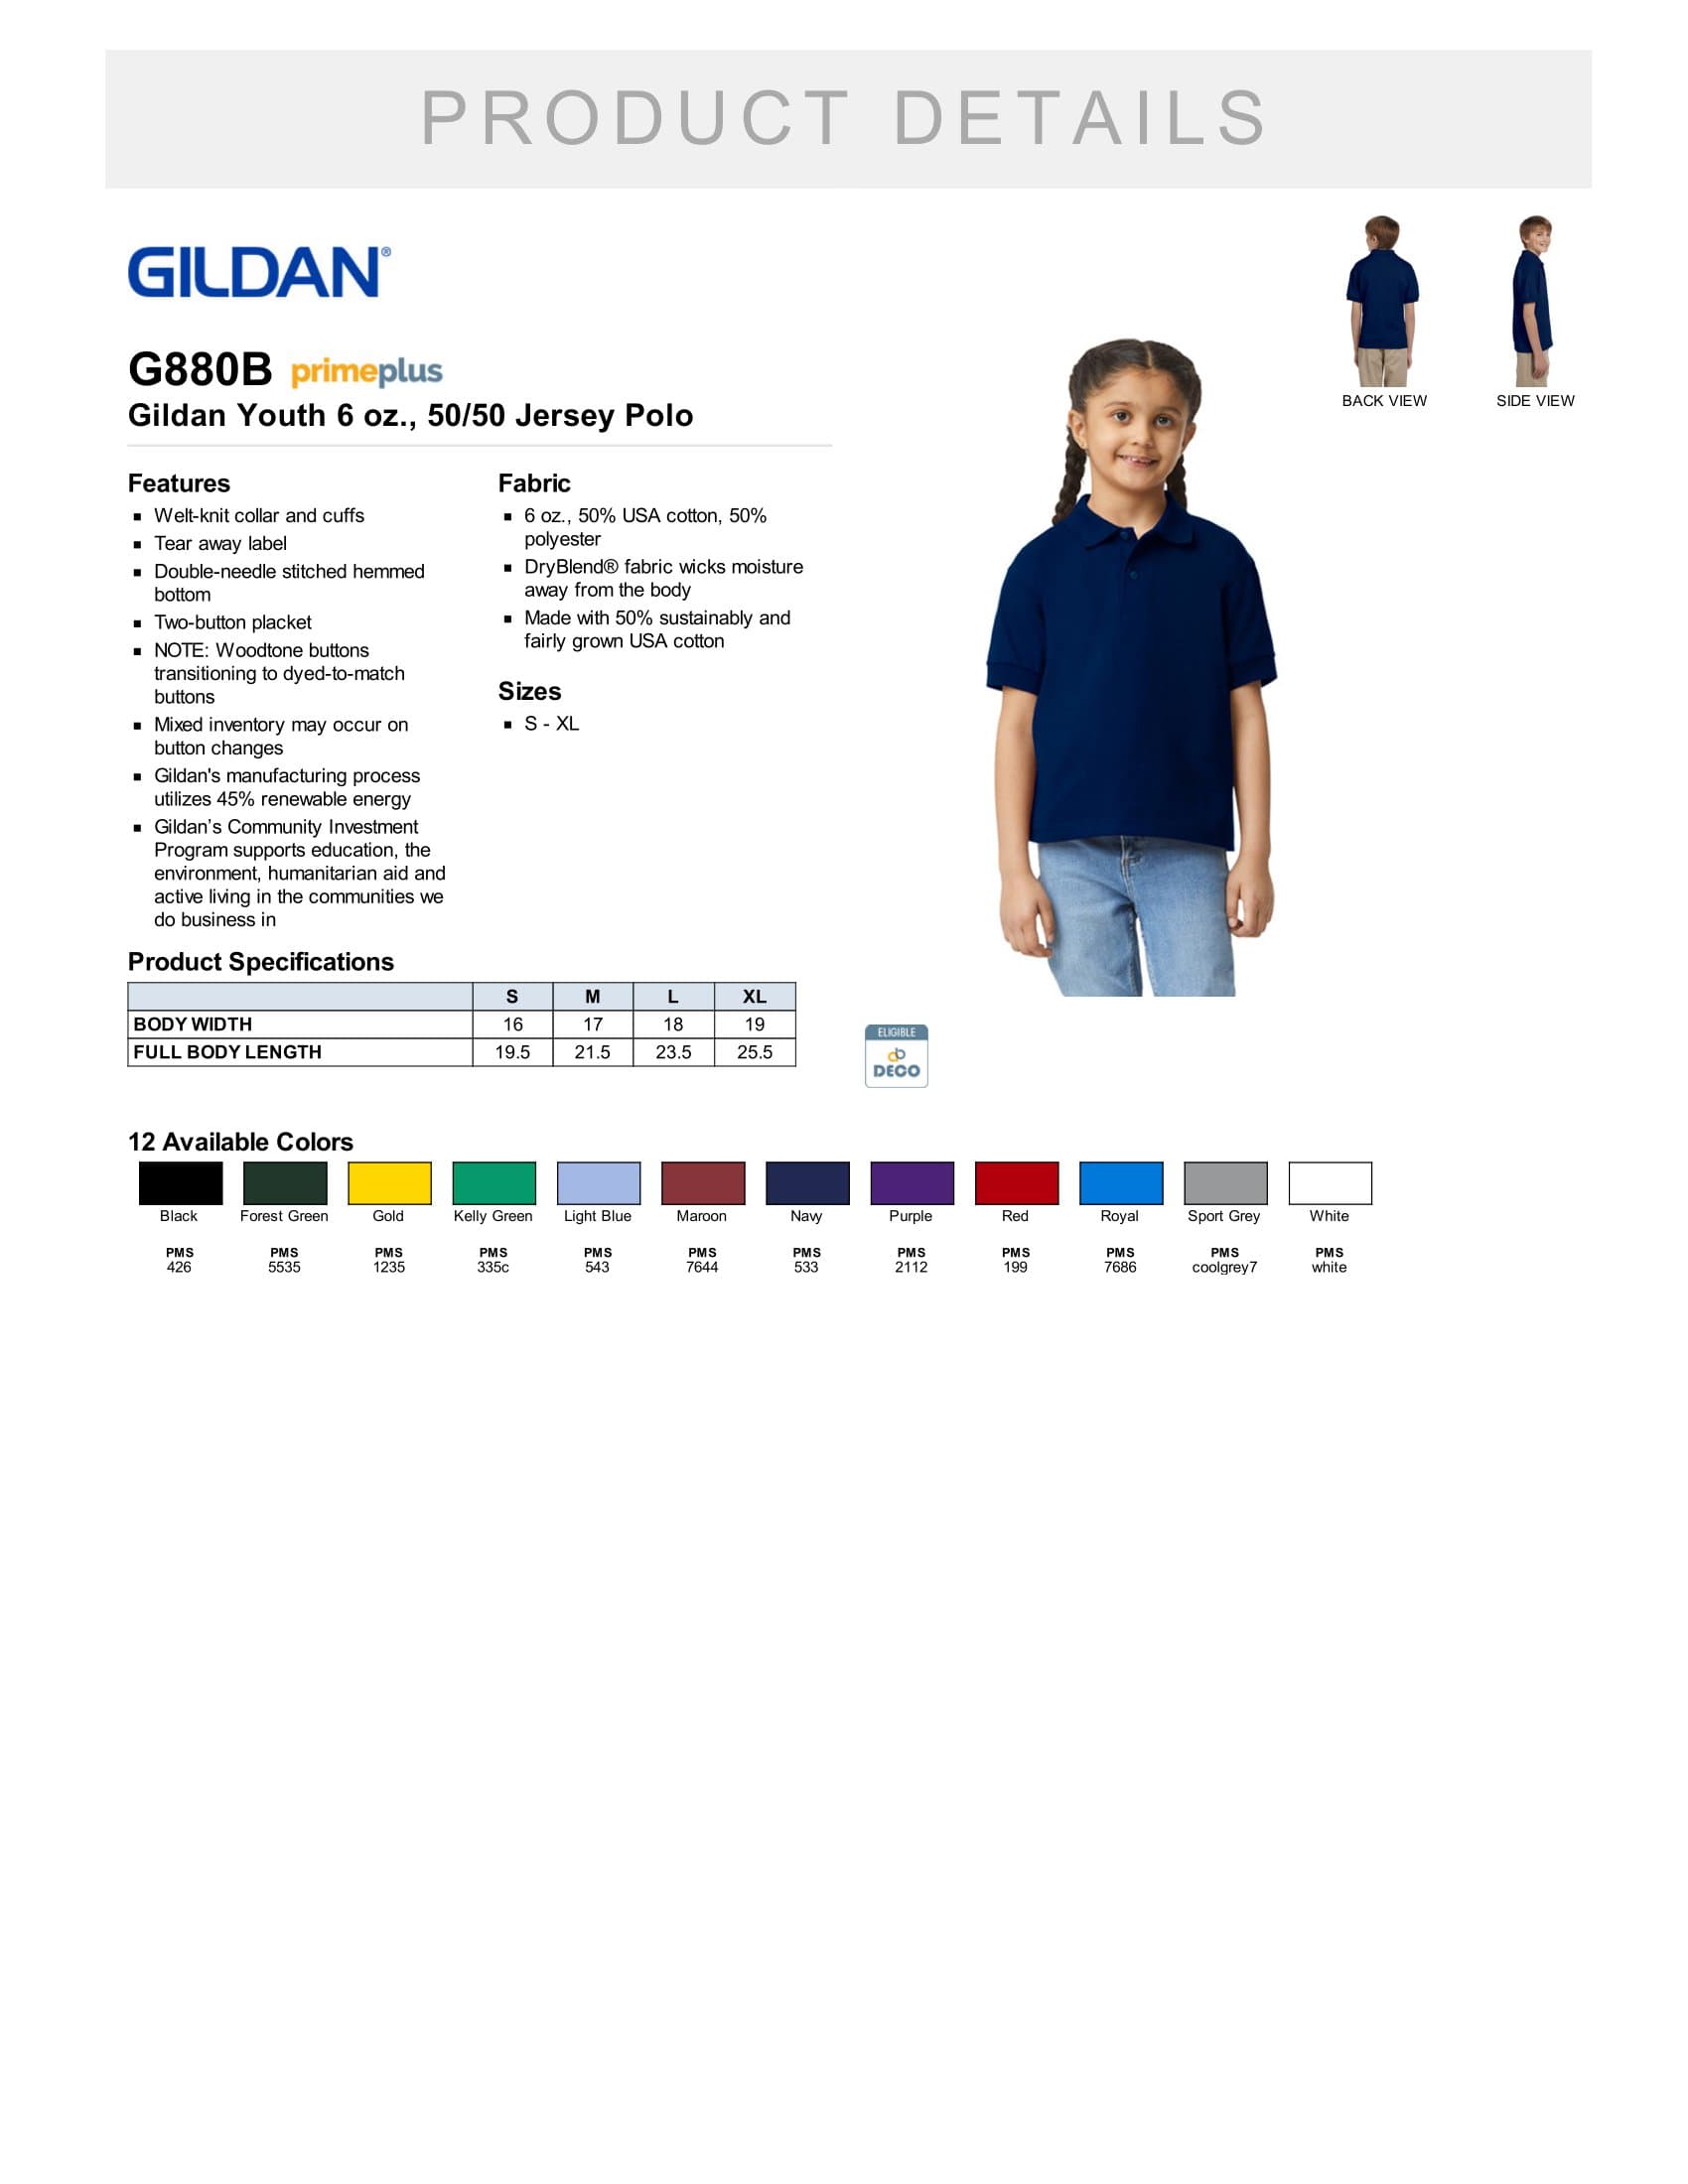 Gildan G880b